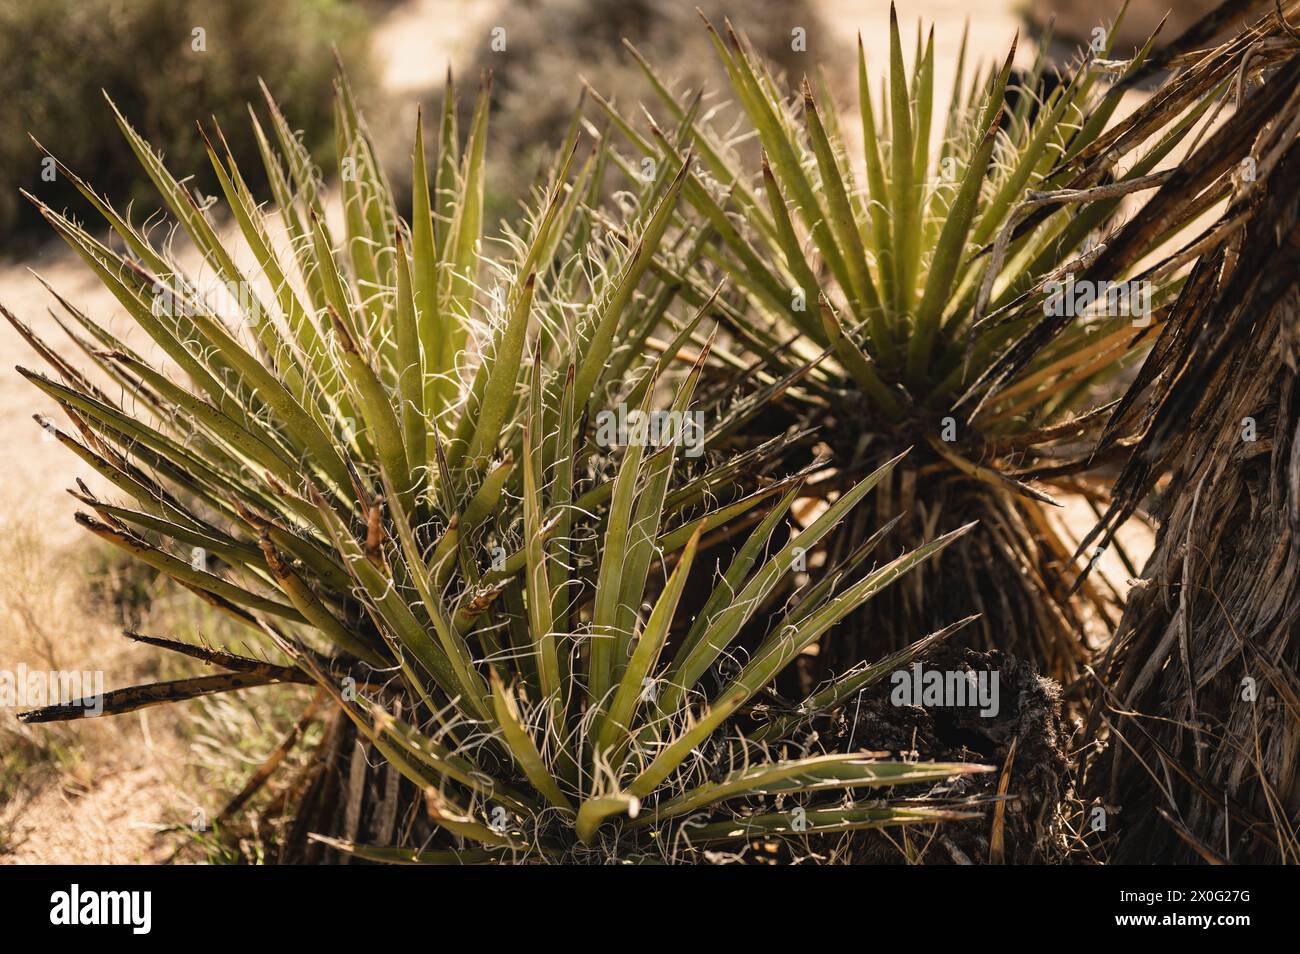 Spiky palm-like tops of growing Joshua Tree plants in Mojave desert Stock Photo